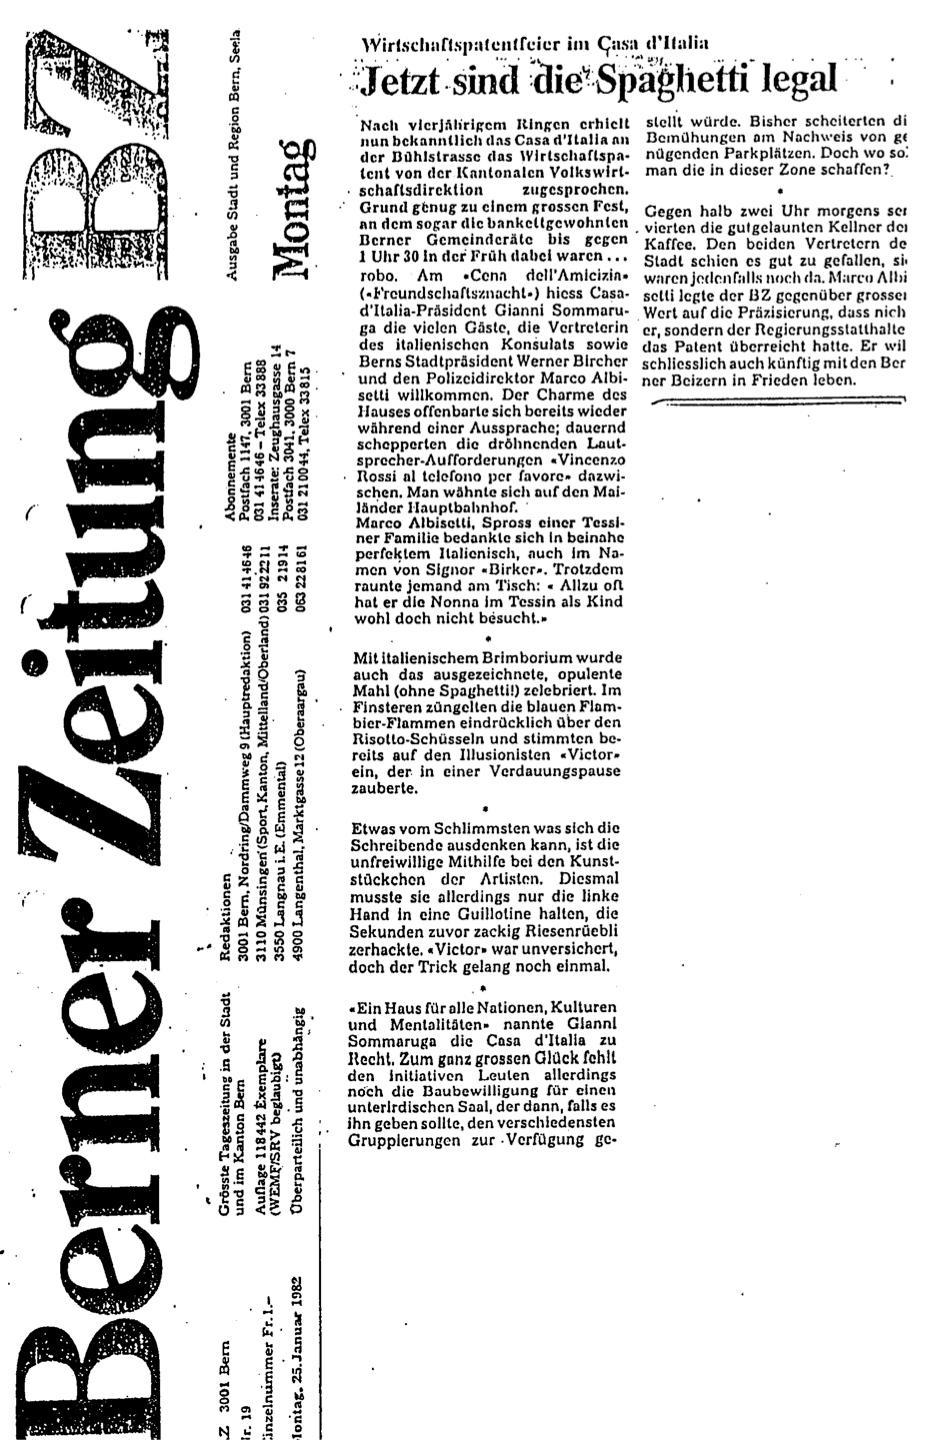 Articolo della Berner Zeitung